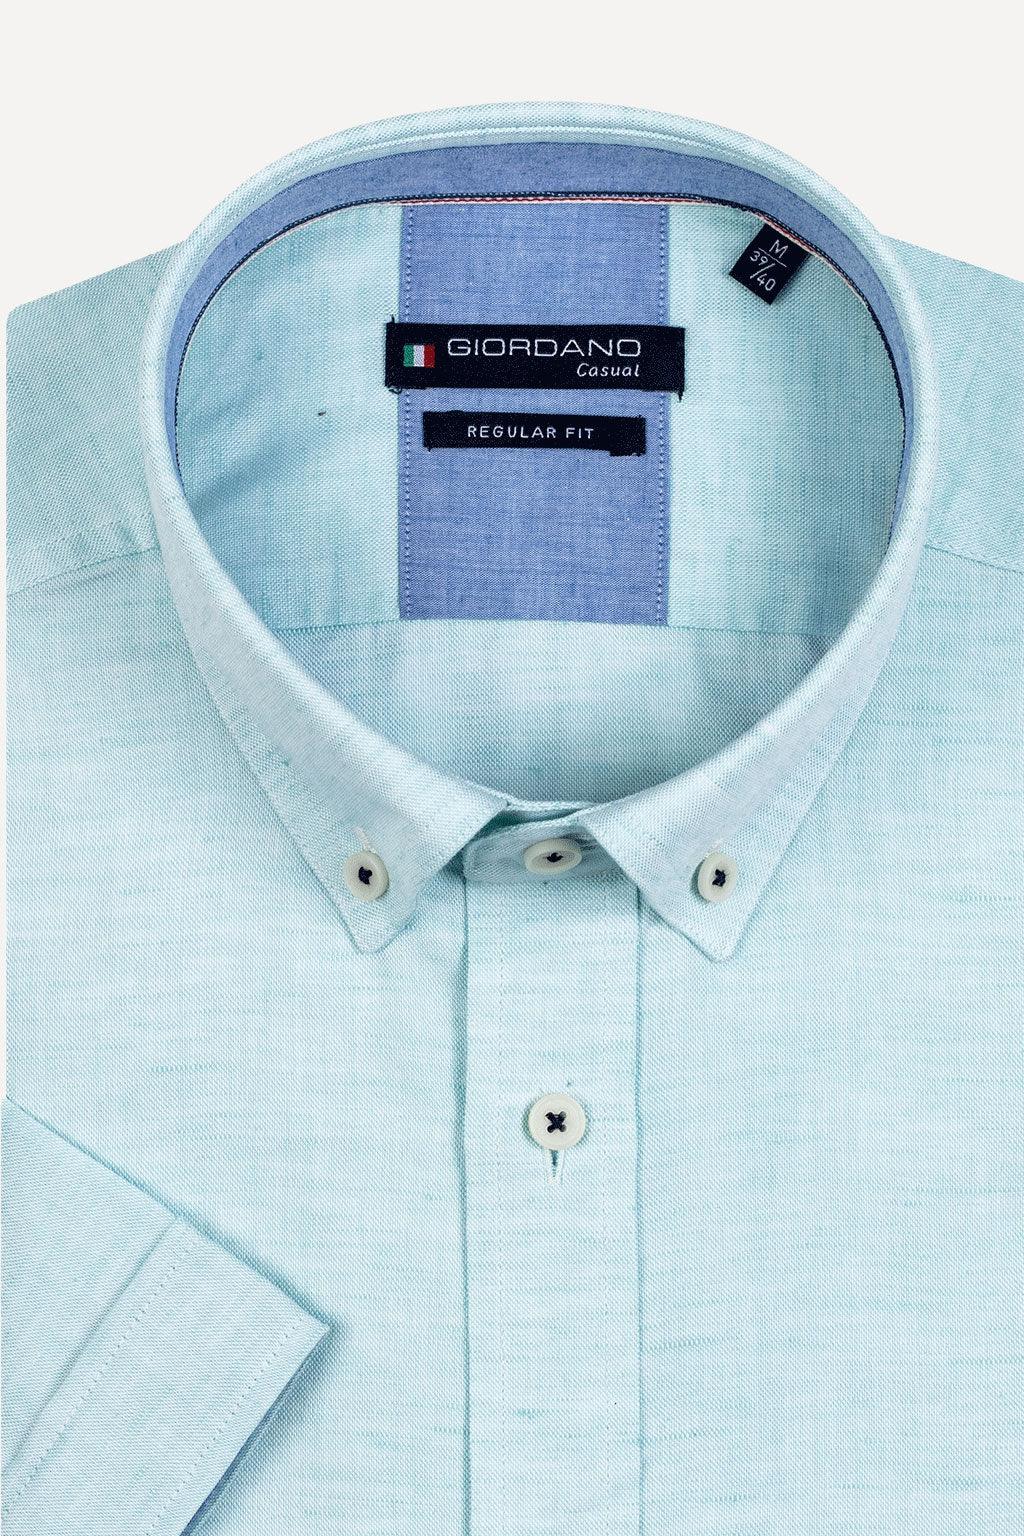 Giordano overhemd korte mouw | Big Boss | the menswear concept